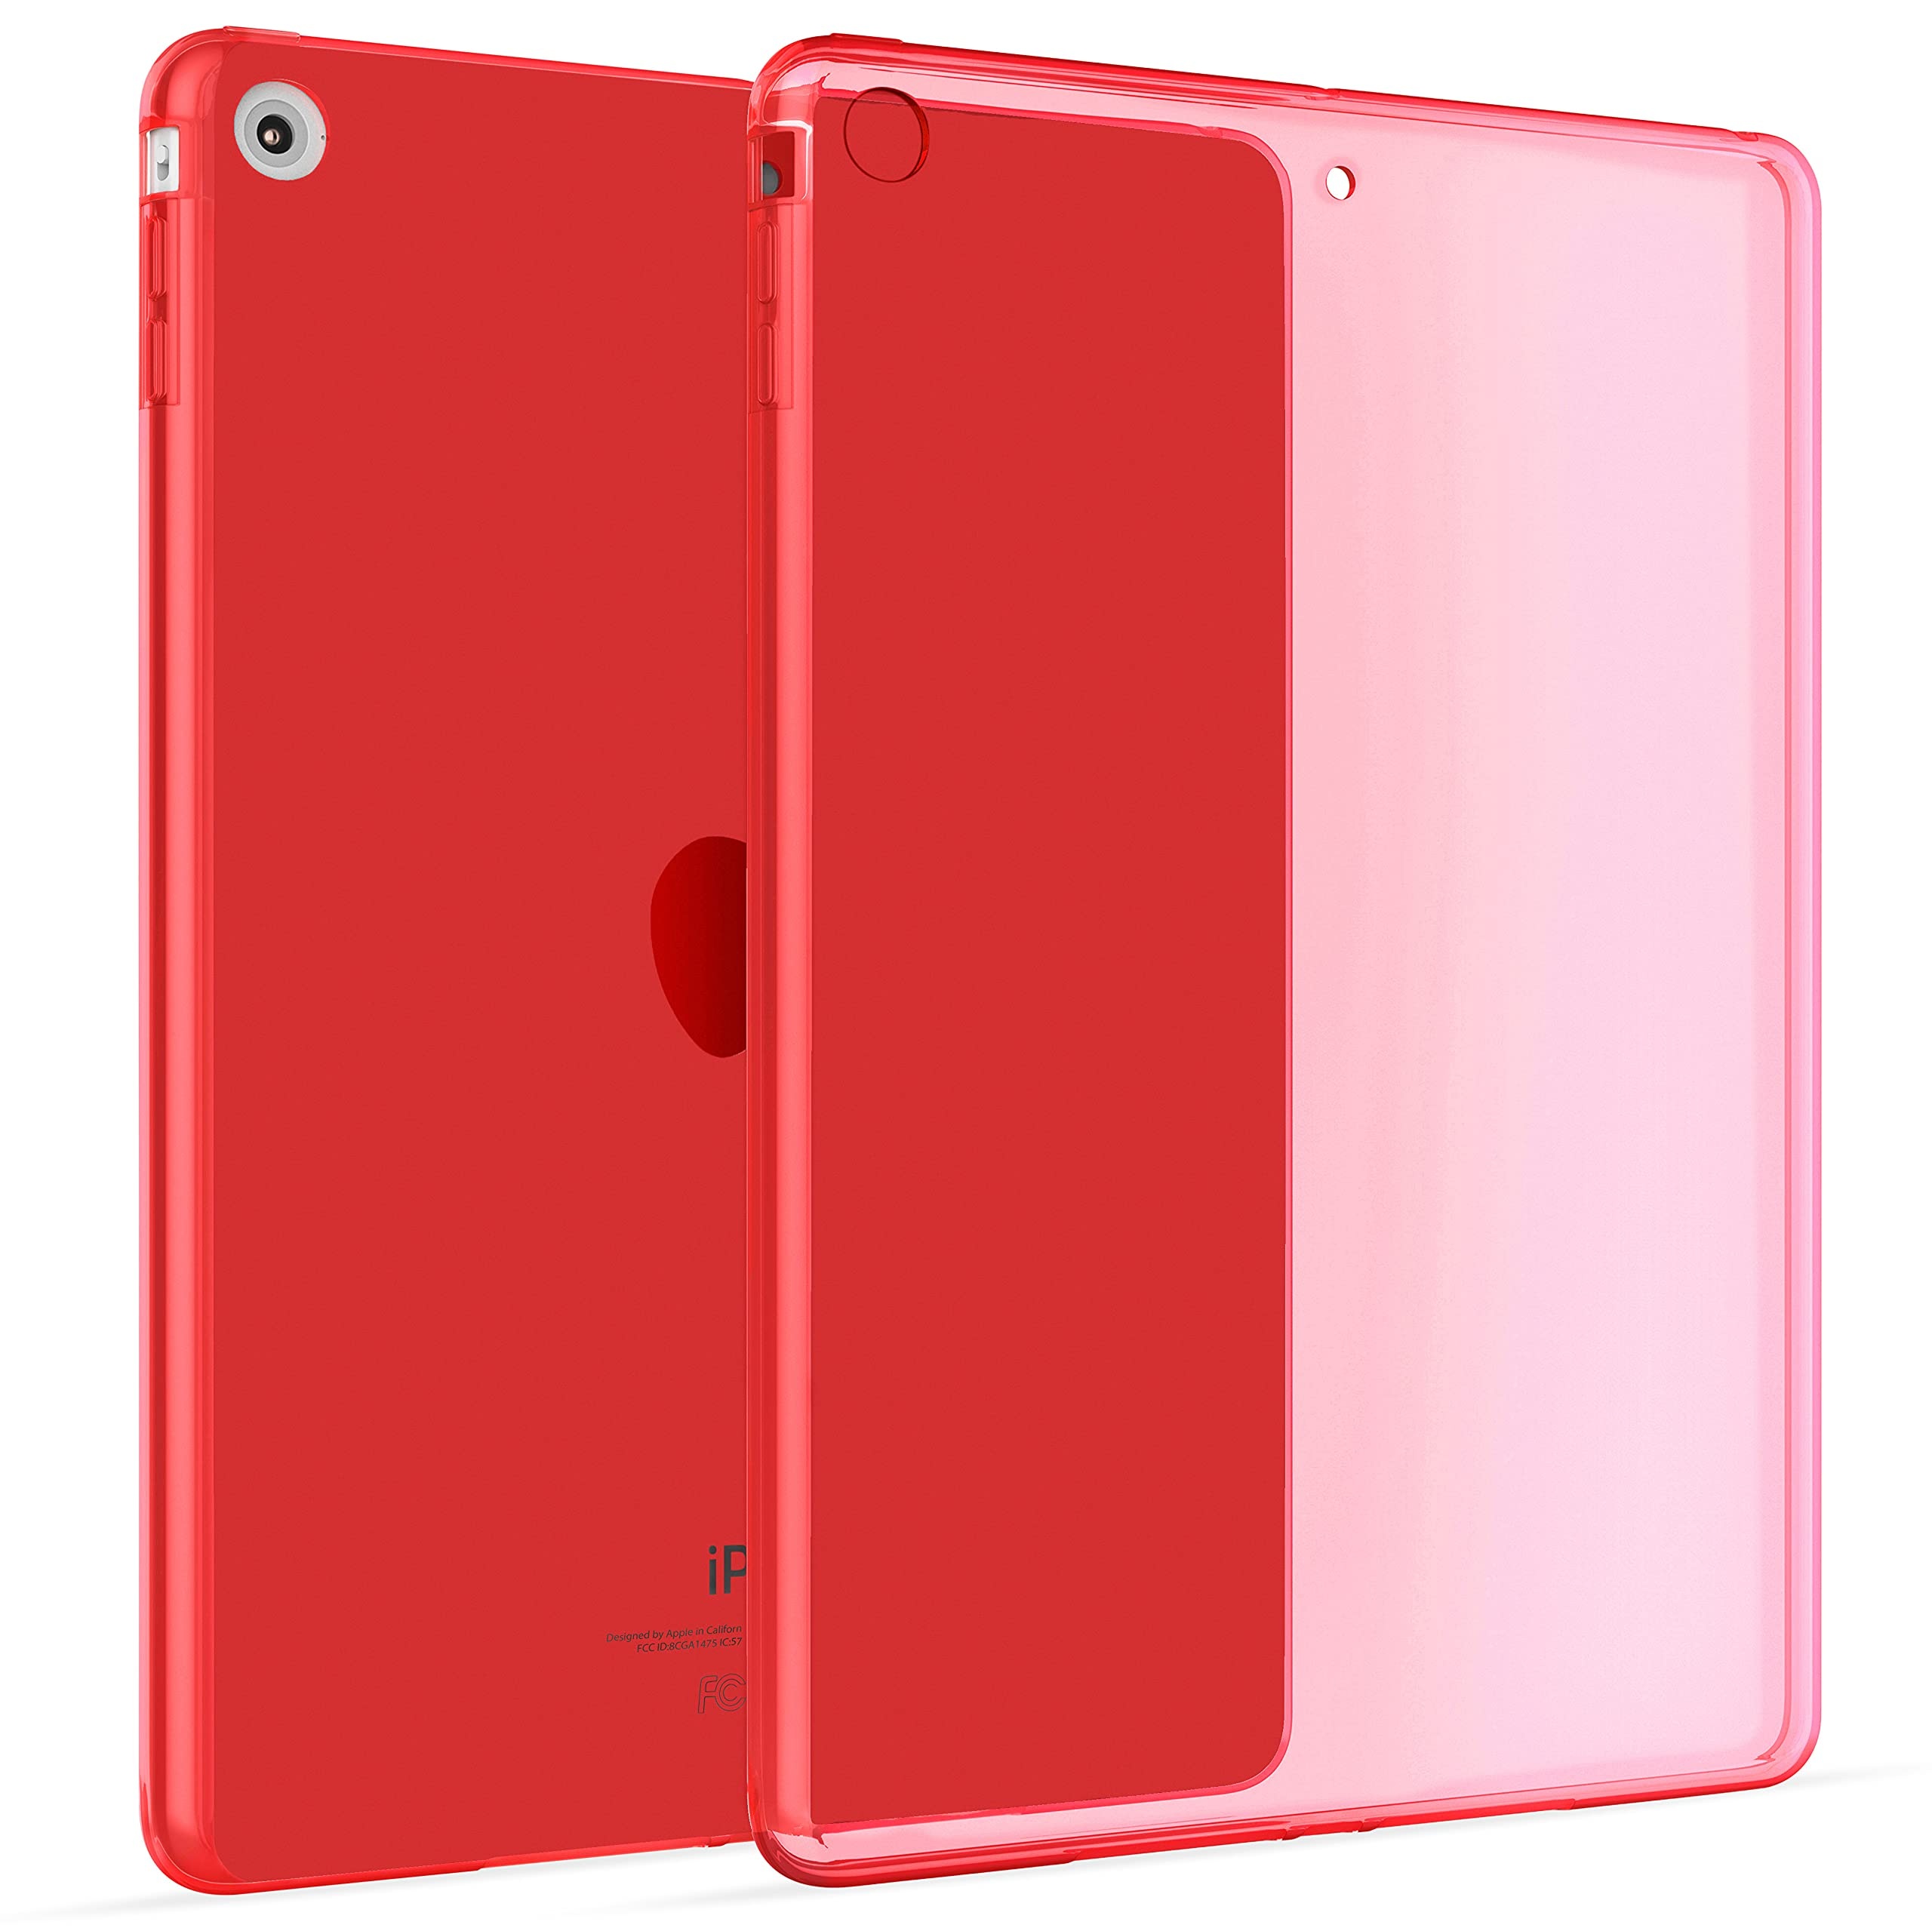 Okuli Hülle Kompatibel mit Apple iPad Mini 1, Mini 2, Mini 3 - Transparent Silikon Cover Case Schutzhülle in Rot